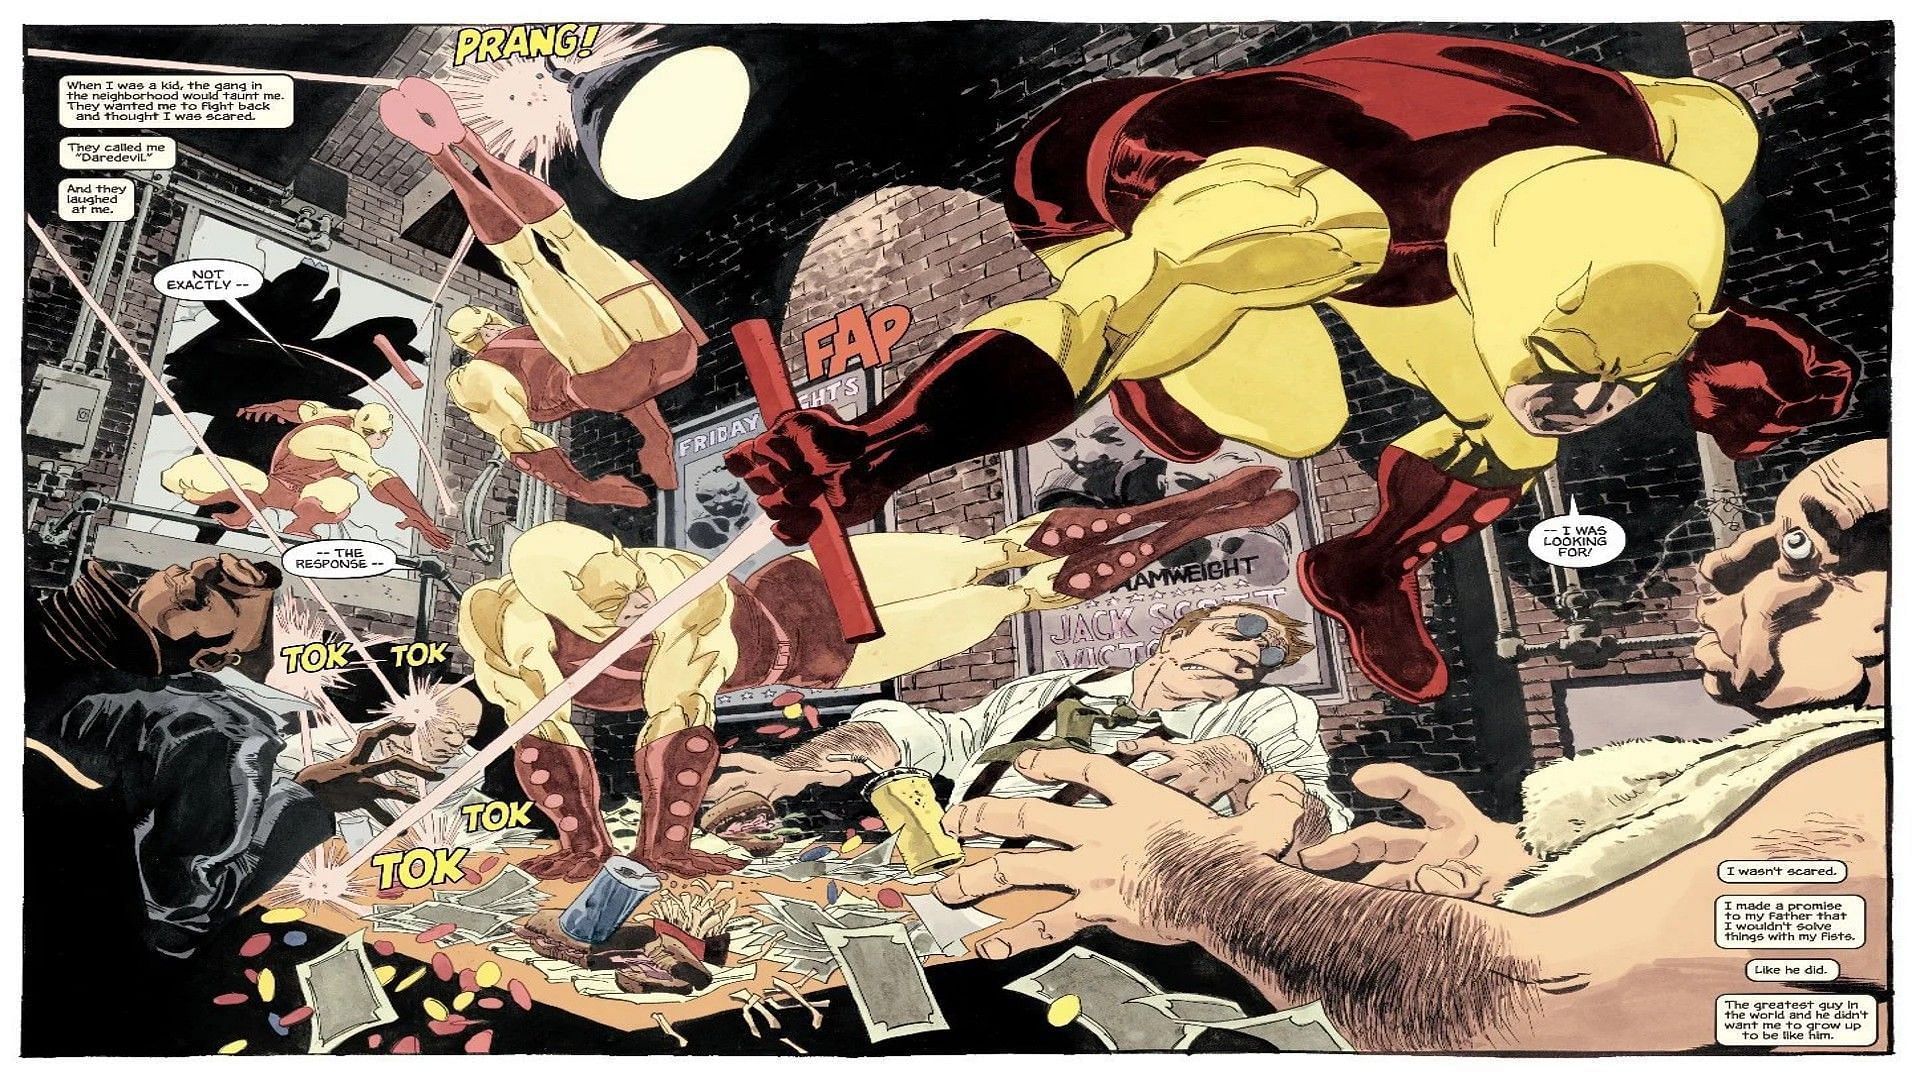 Daredevil revisits his origin(Image via Marvel Comics)